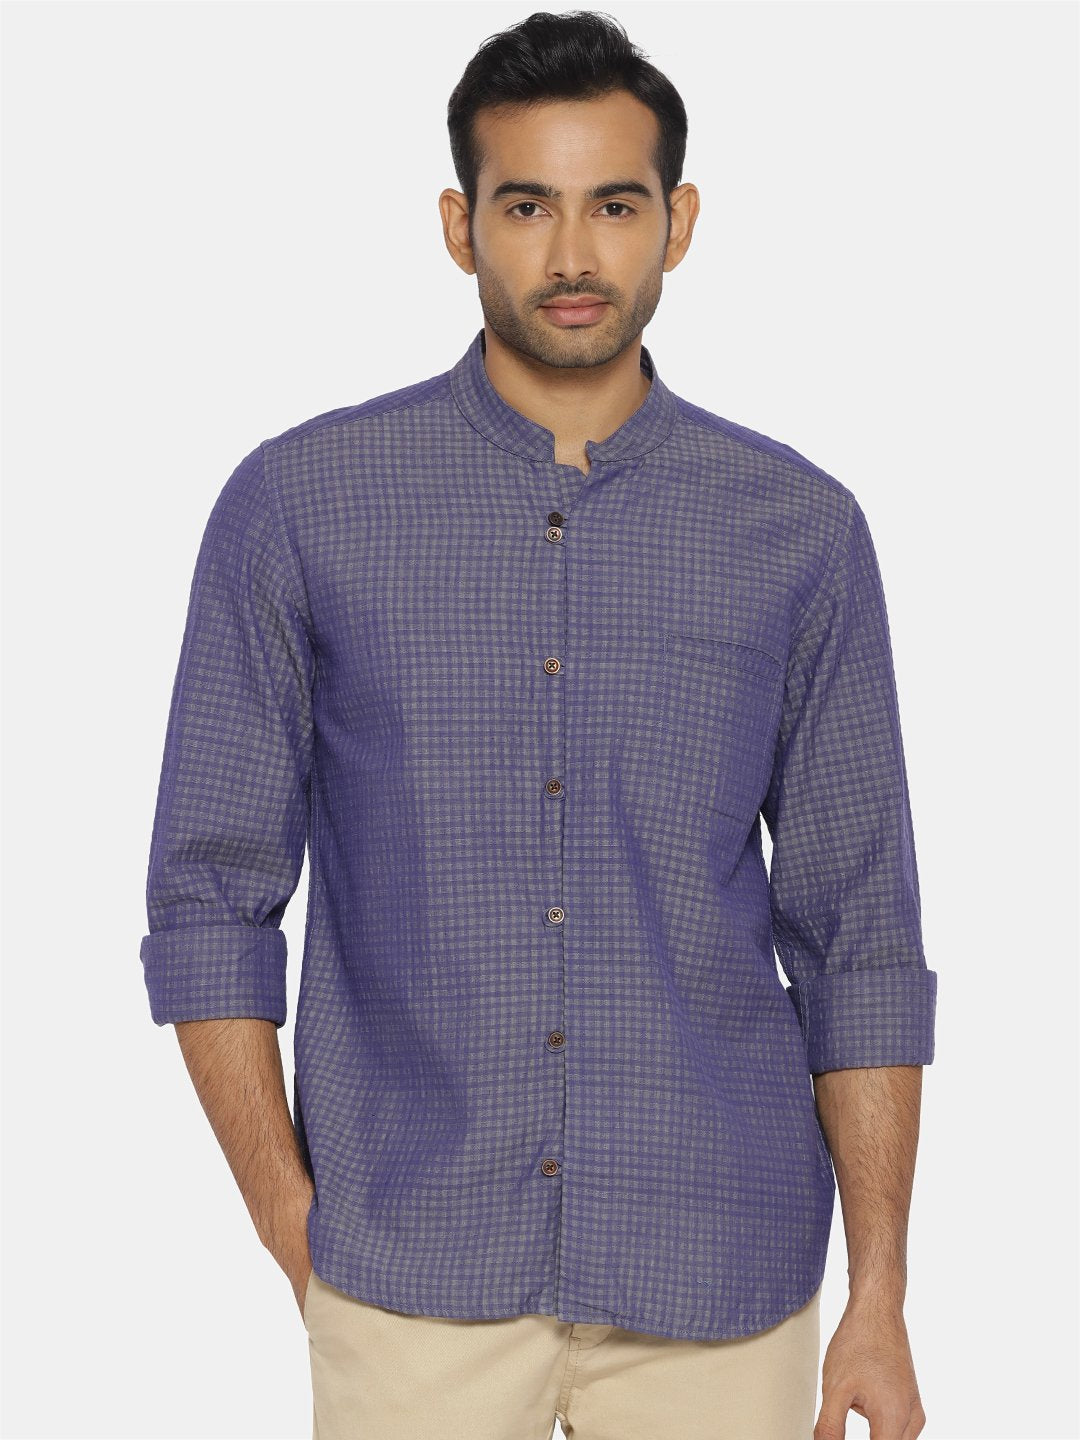 Lavender blue mandarin collar shirt